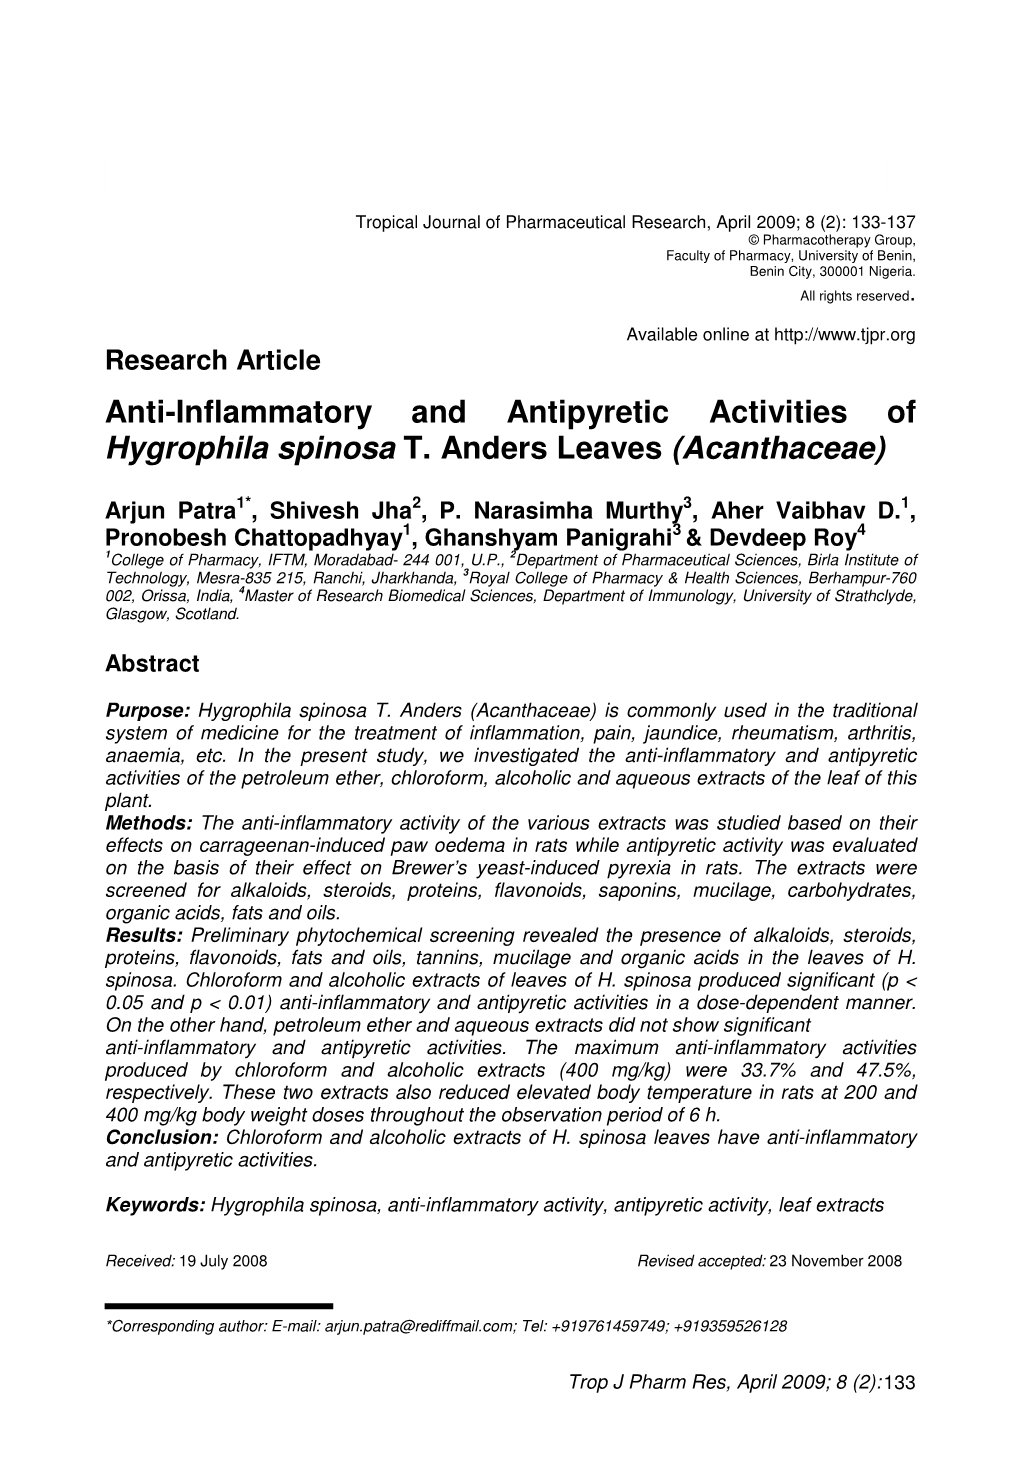 Anti-Inflammatory and Antipyretic Activities of Hygrophila Spinosa T